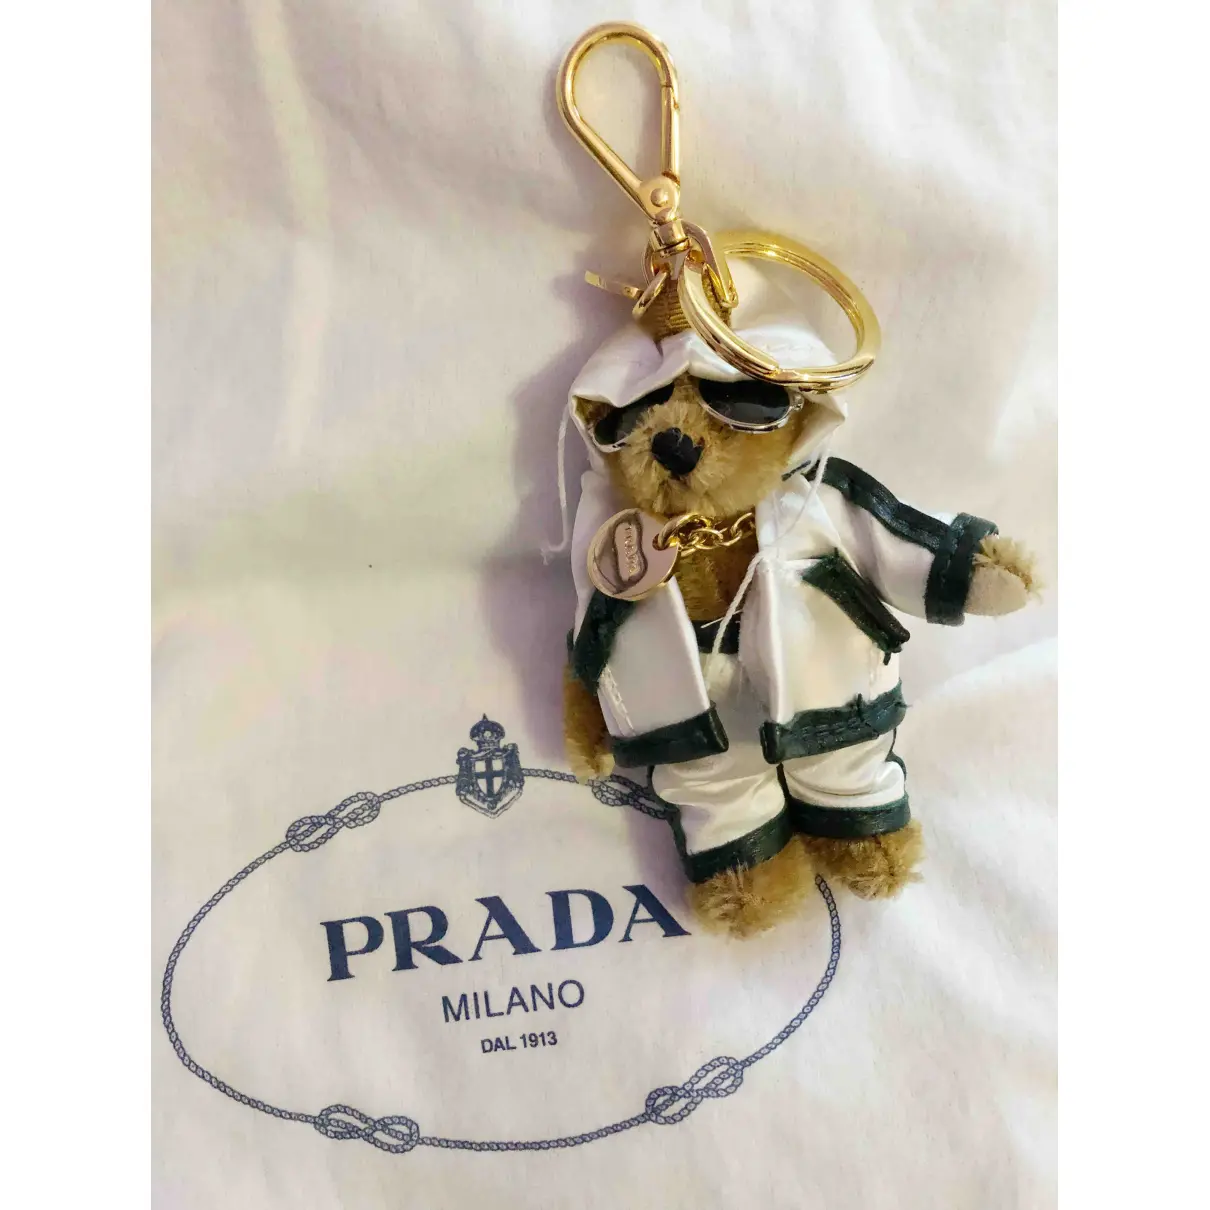 Buy Prada Pendant online